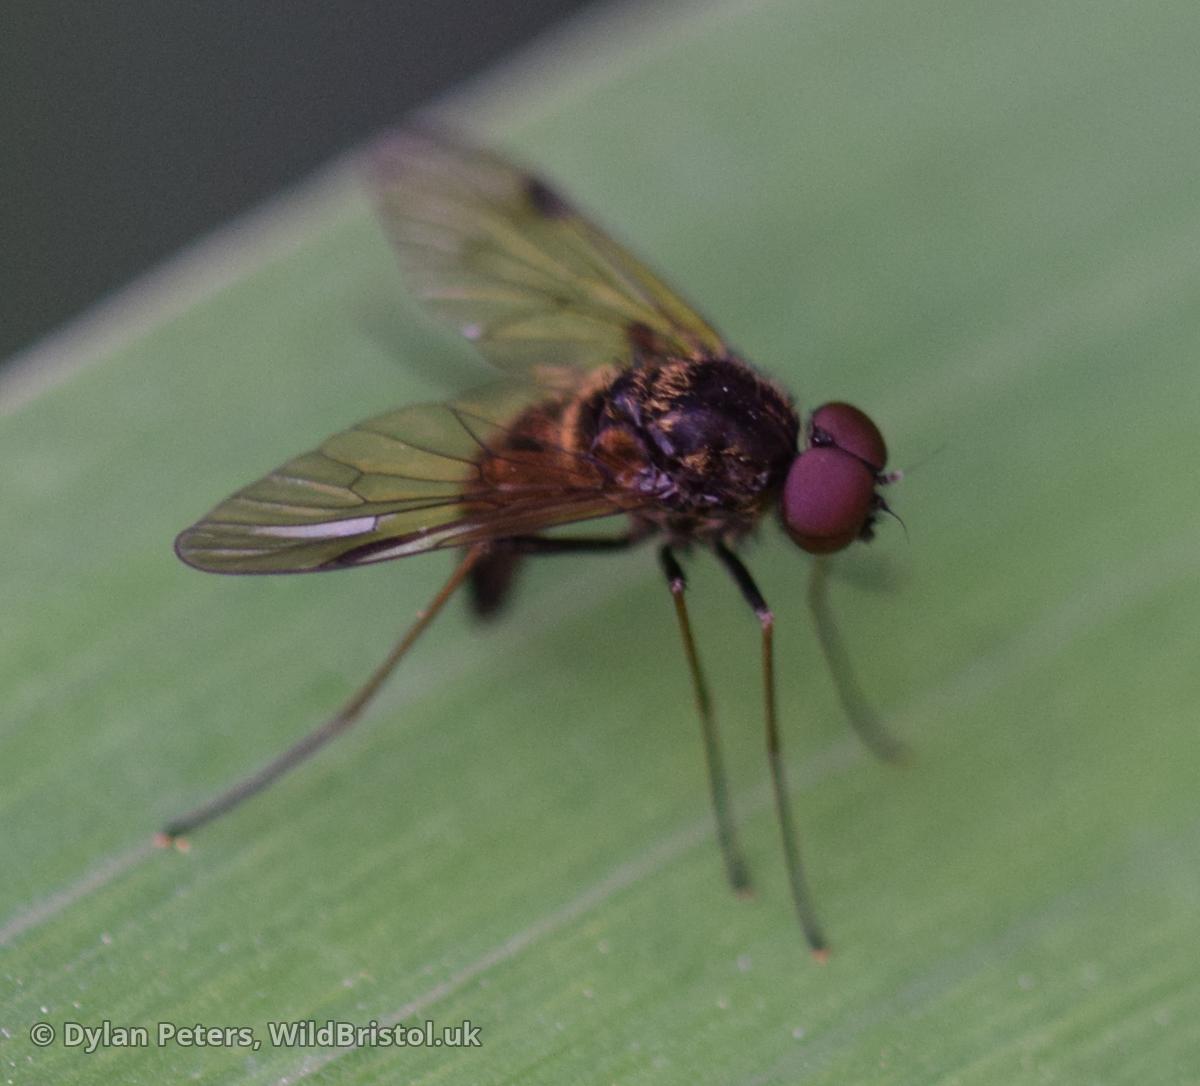 Black Snipefly (Chrysopilus cristatus)